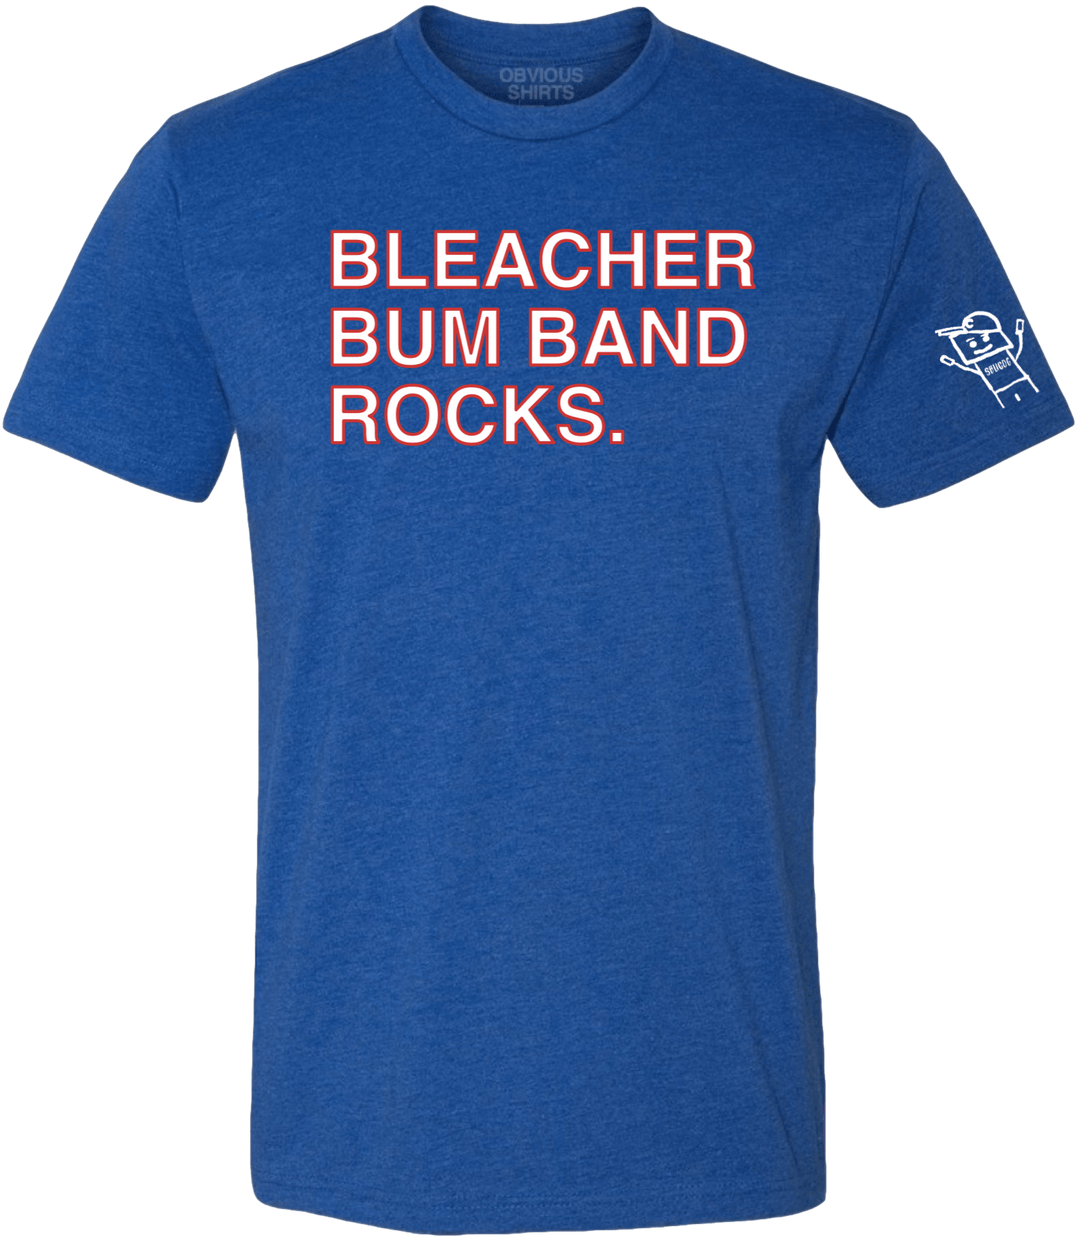 BLEACHER BUM BAND ROCKS. - OBVIOUS SHIRTS